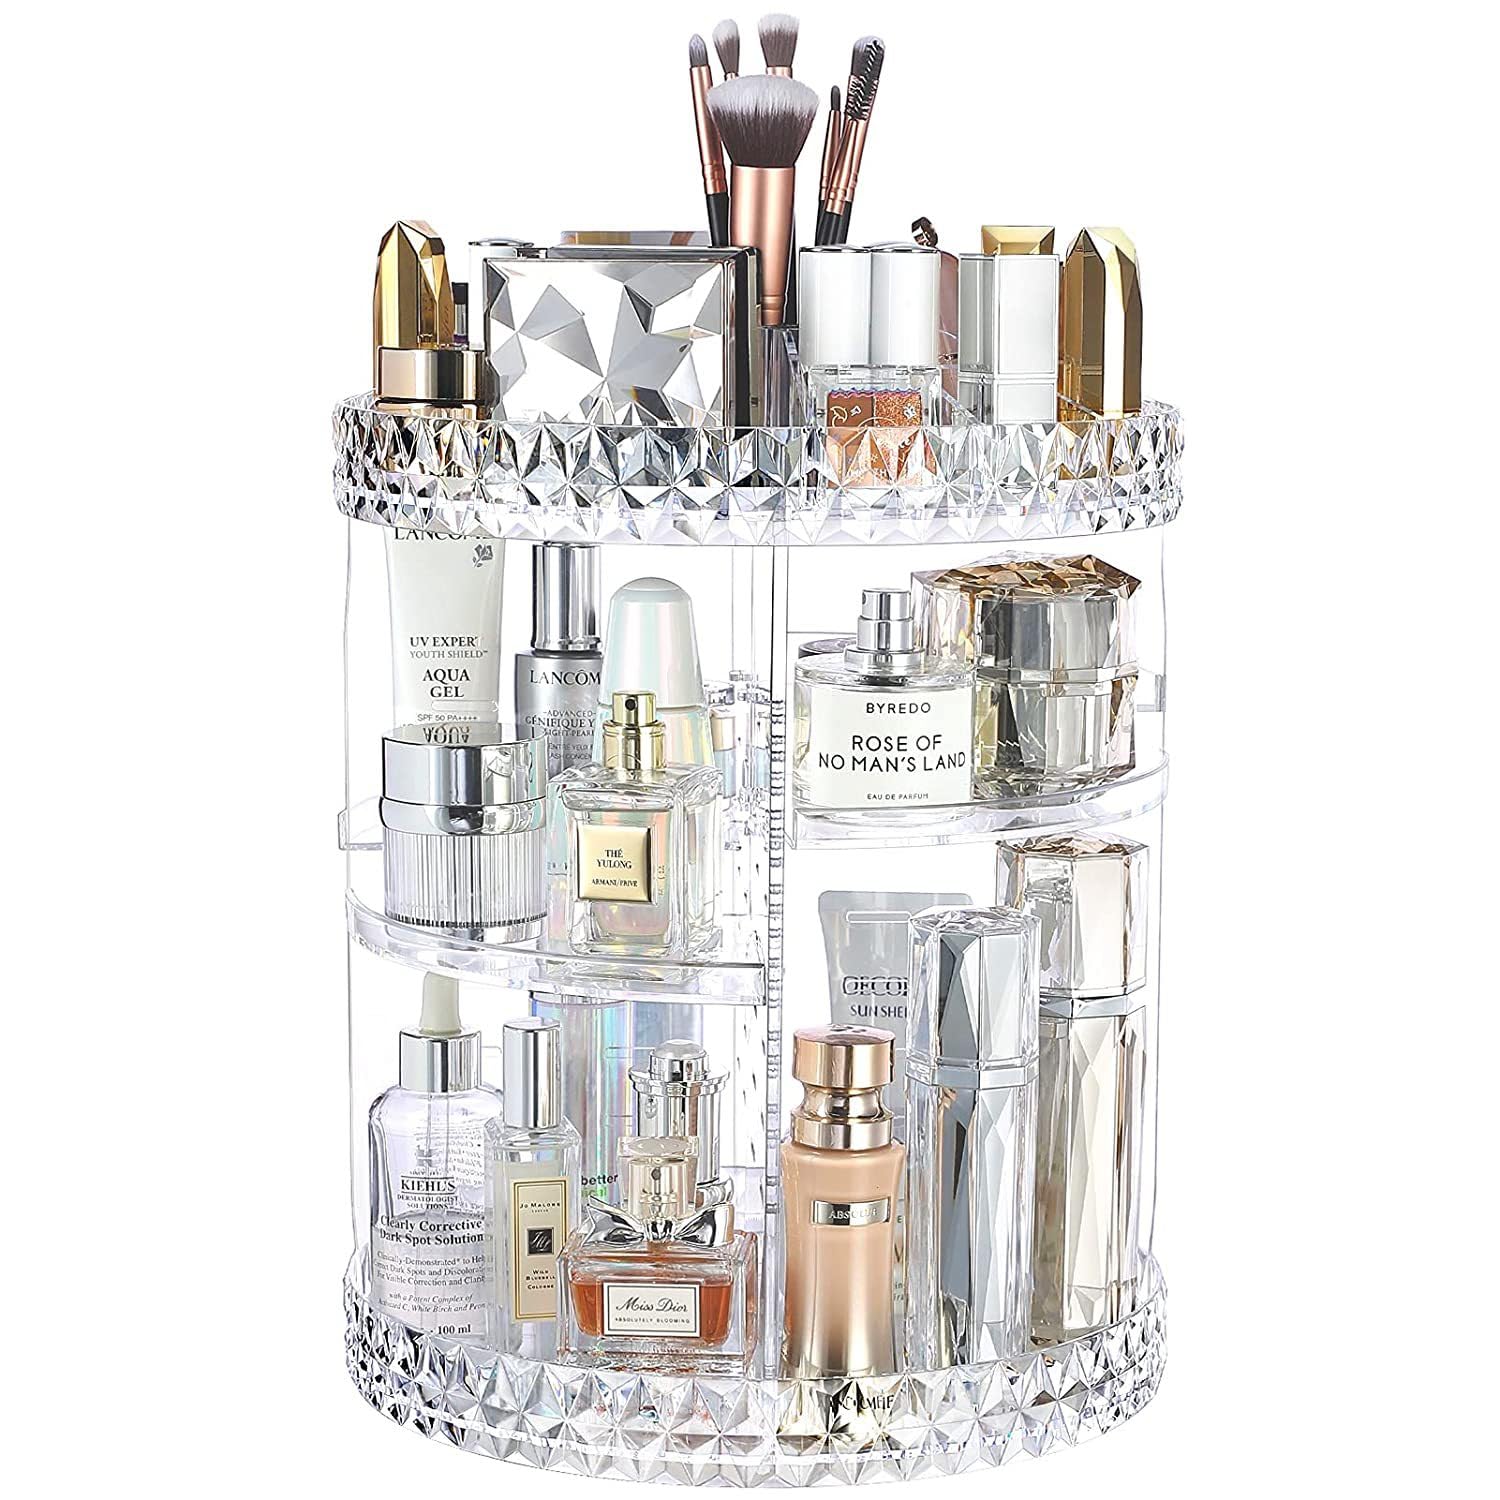 VIO Diamond Makeup Organizer, Clear Acrylic 360 Degree Rotating Cosmetic Storage Organizer, 6-Layer Adjustable Makeup Display Case, Organizer for Lipsticks and Makeup Brushes